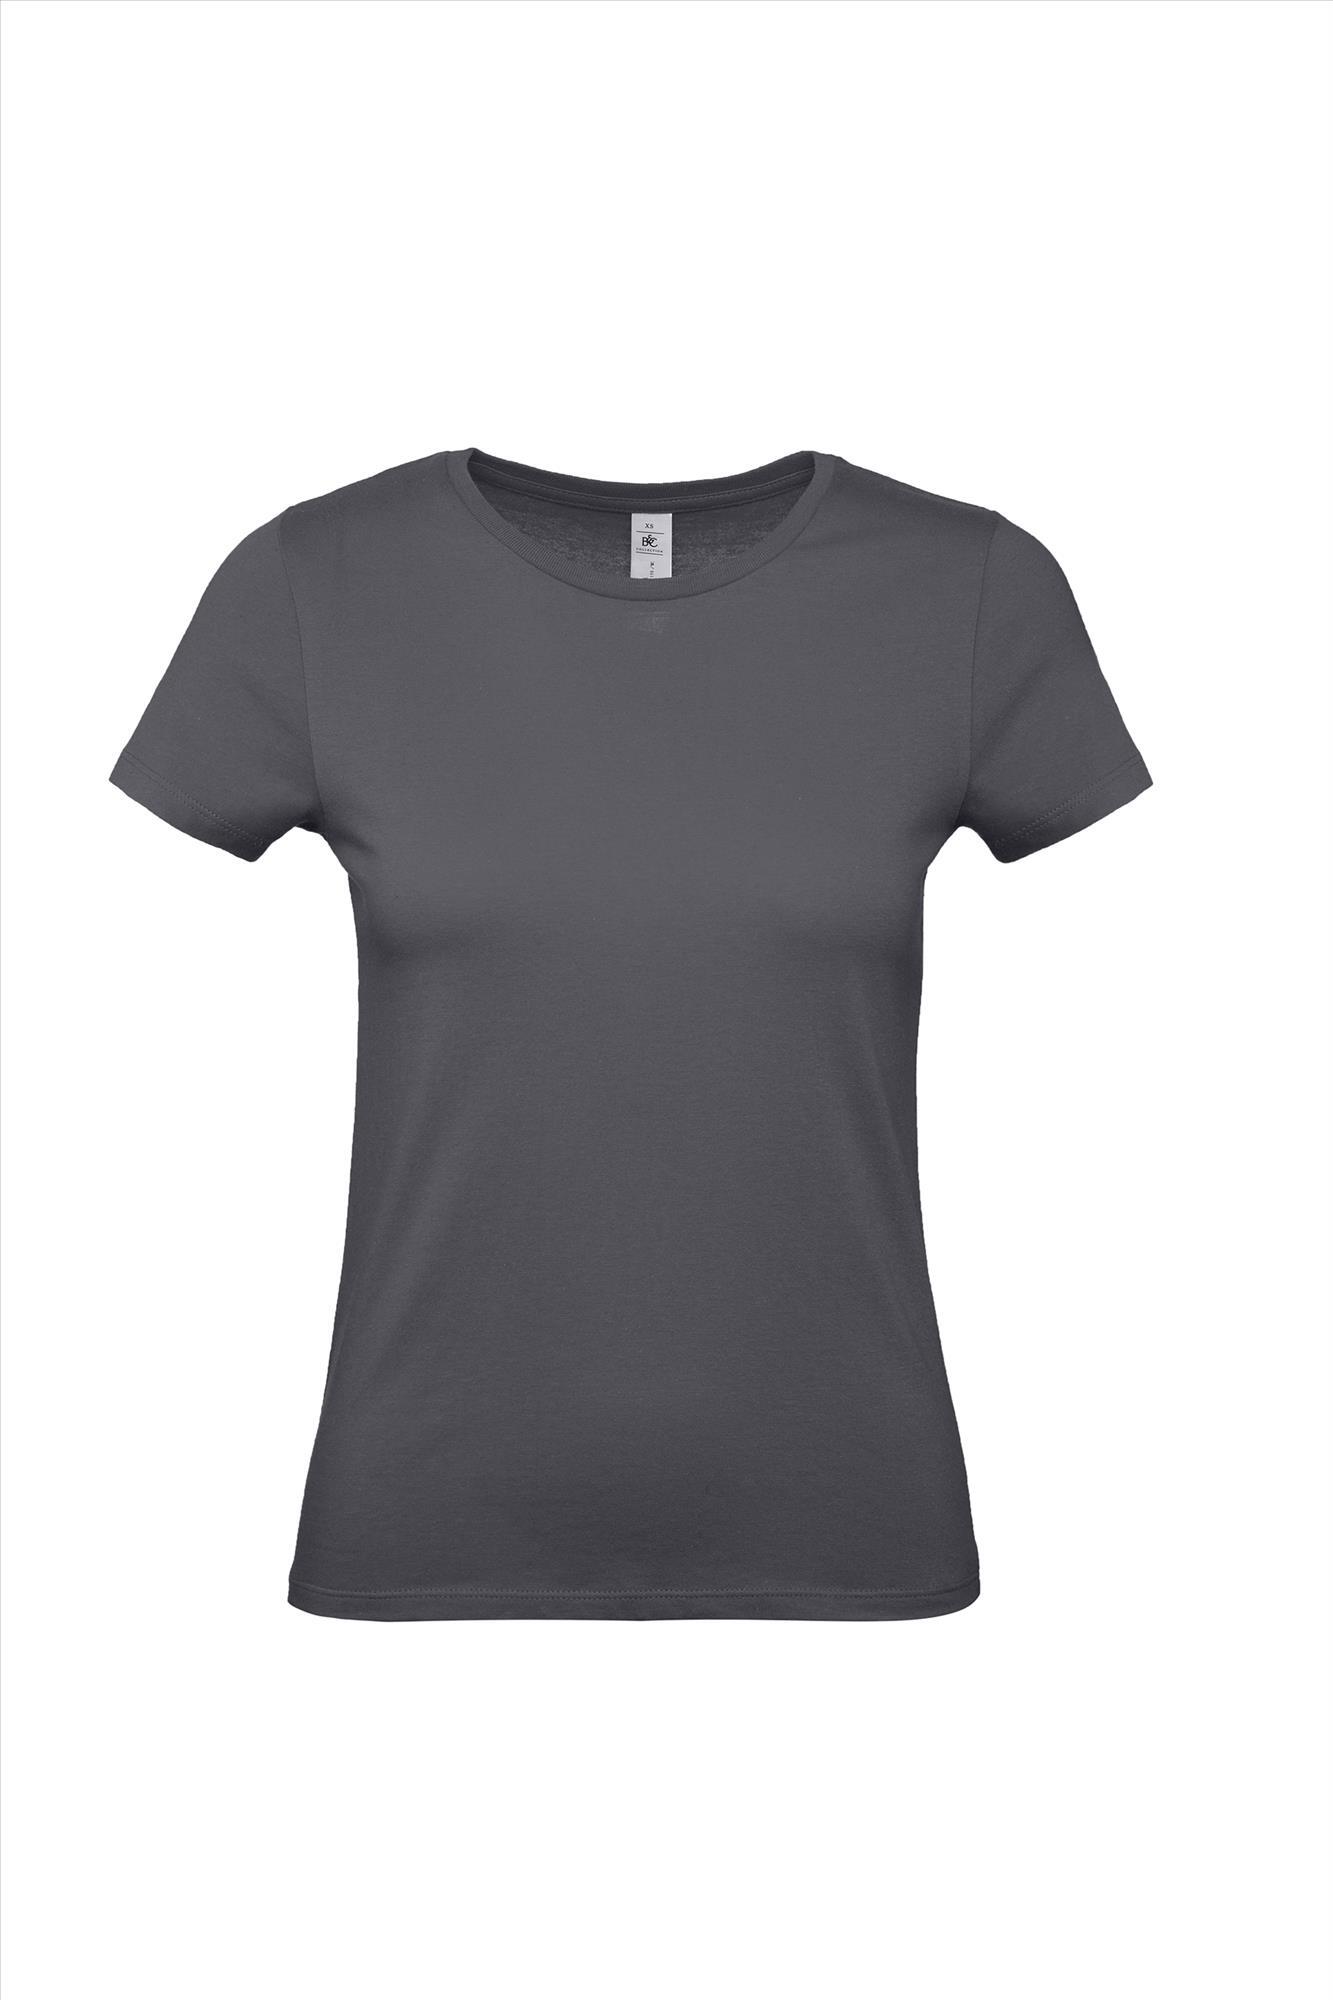 Modern T-shirt voor haar dames shirt donkergrijs